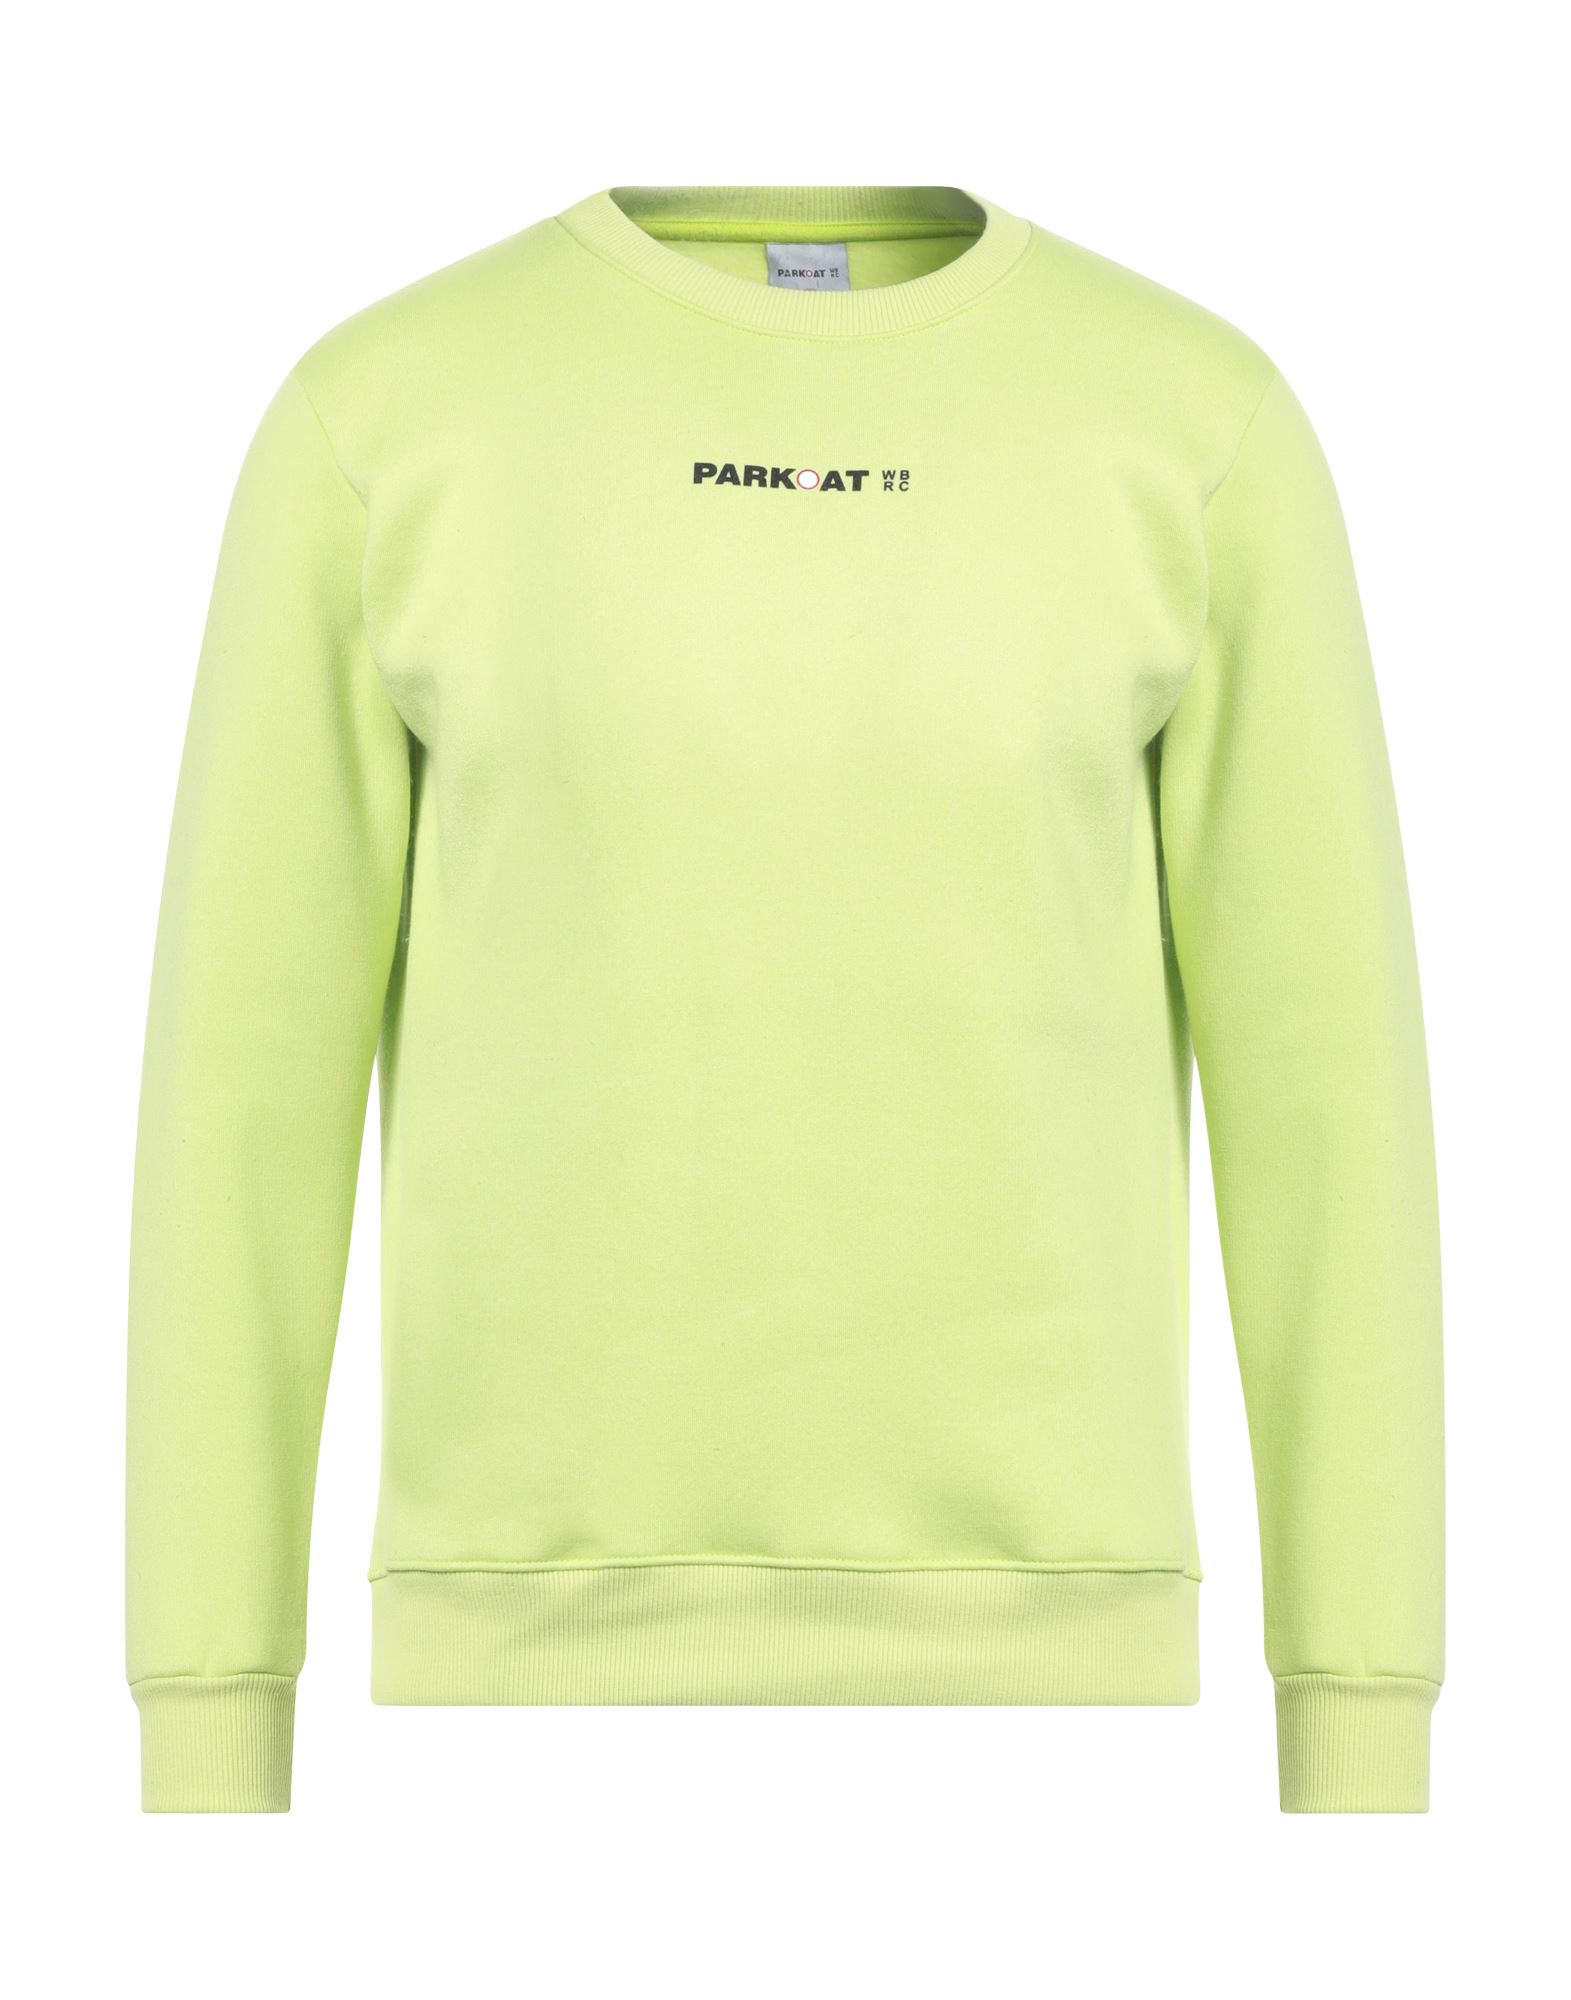 Parkoat Sweatshirts In Green